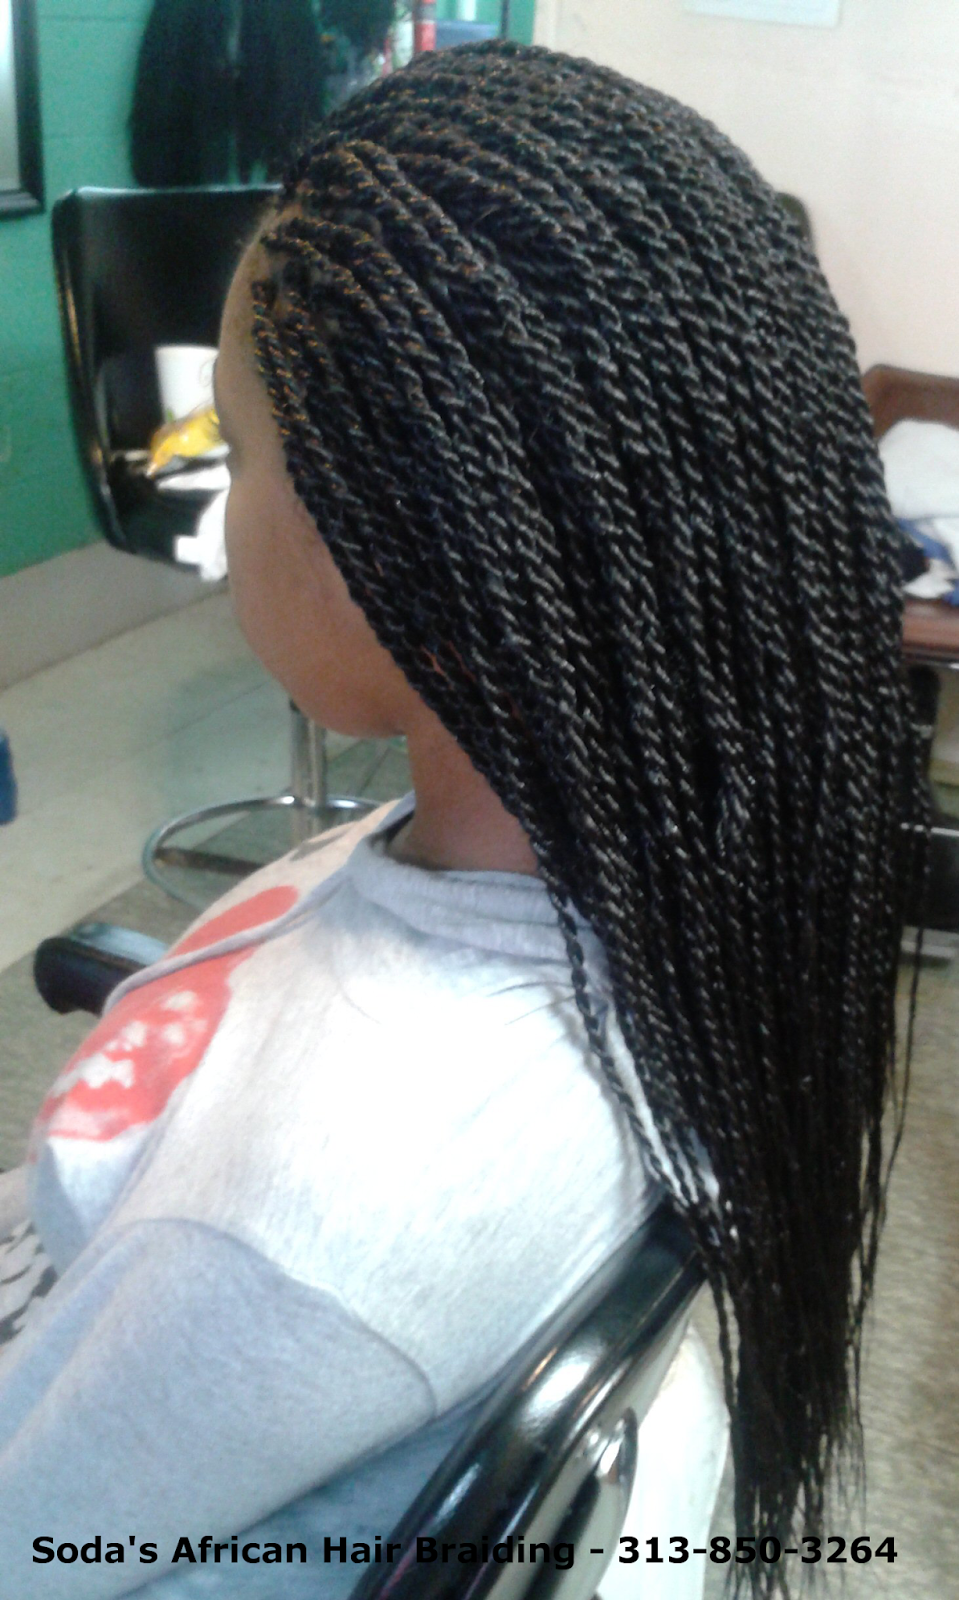 Sodas African Hair Braiding Our Hair Style Gallery